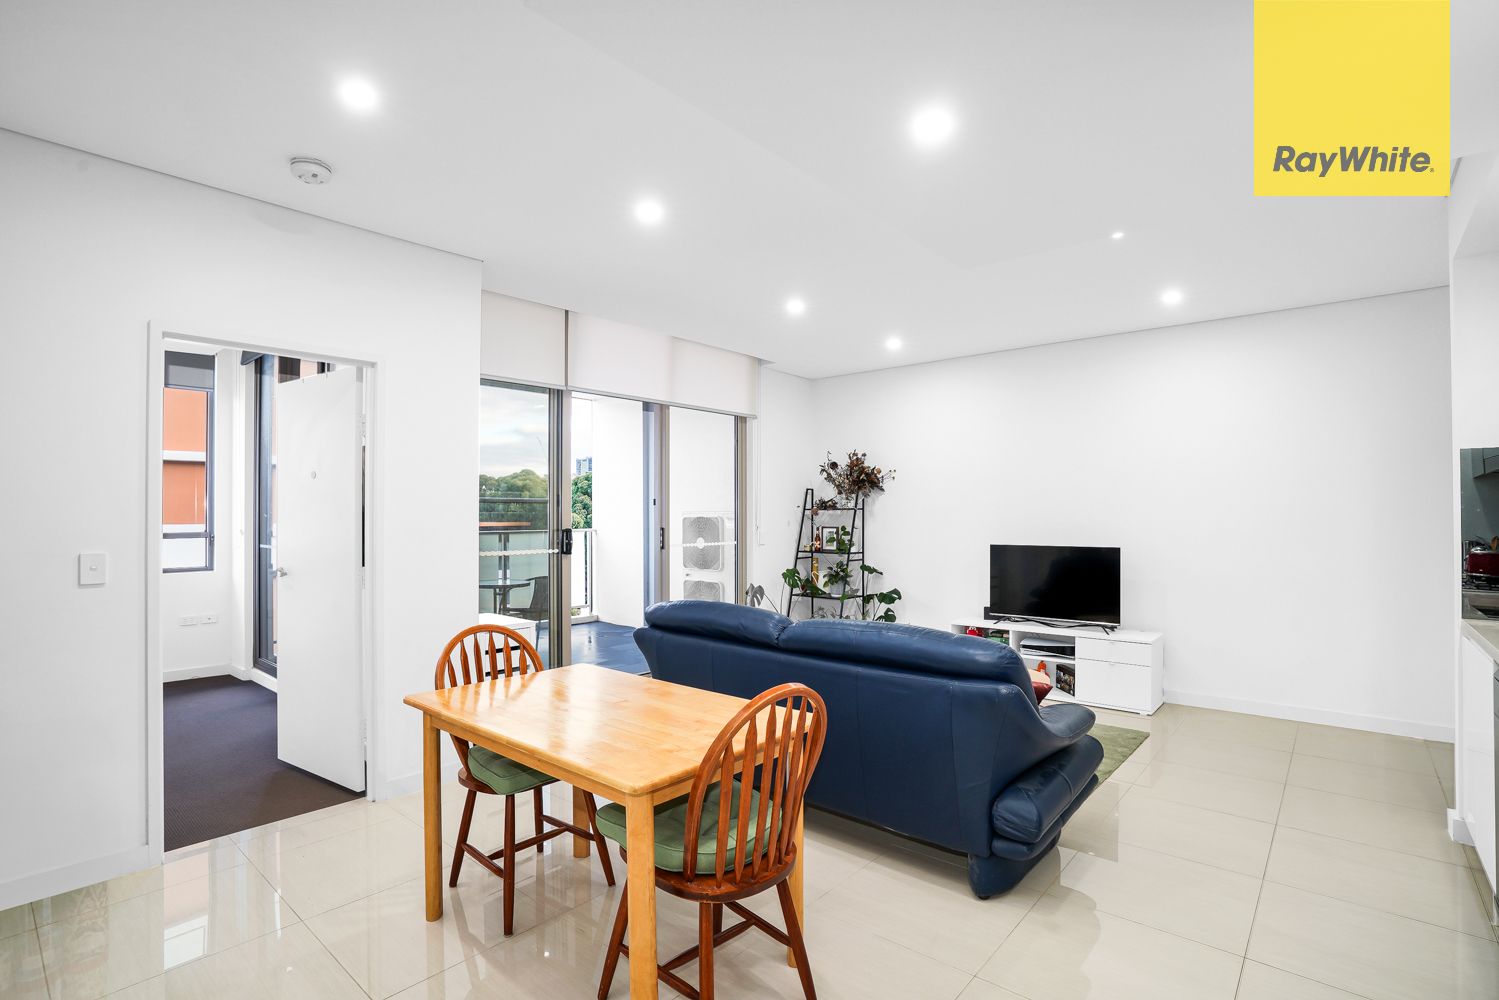 2 bedrooms Apartment / Unit / Flat in 2502/1A Morton Street PARRAMATTA NSW, 2150